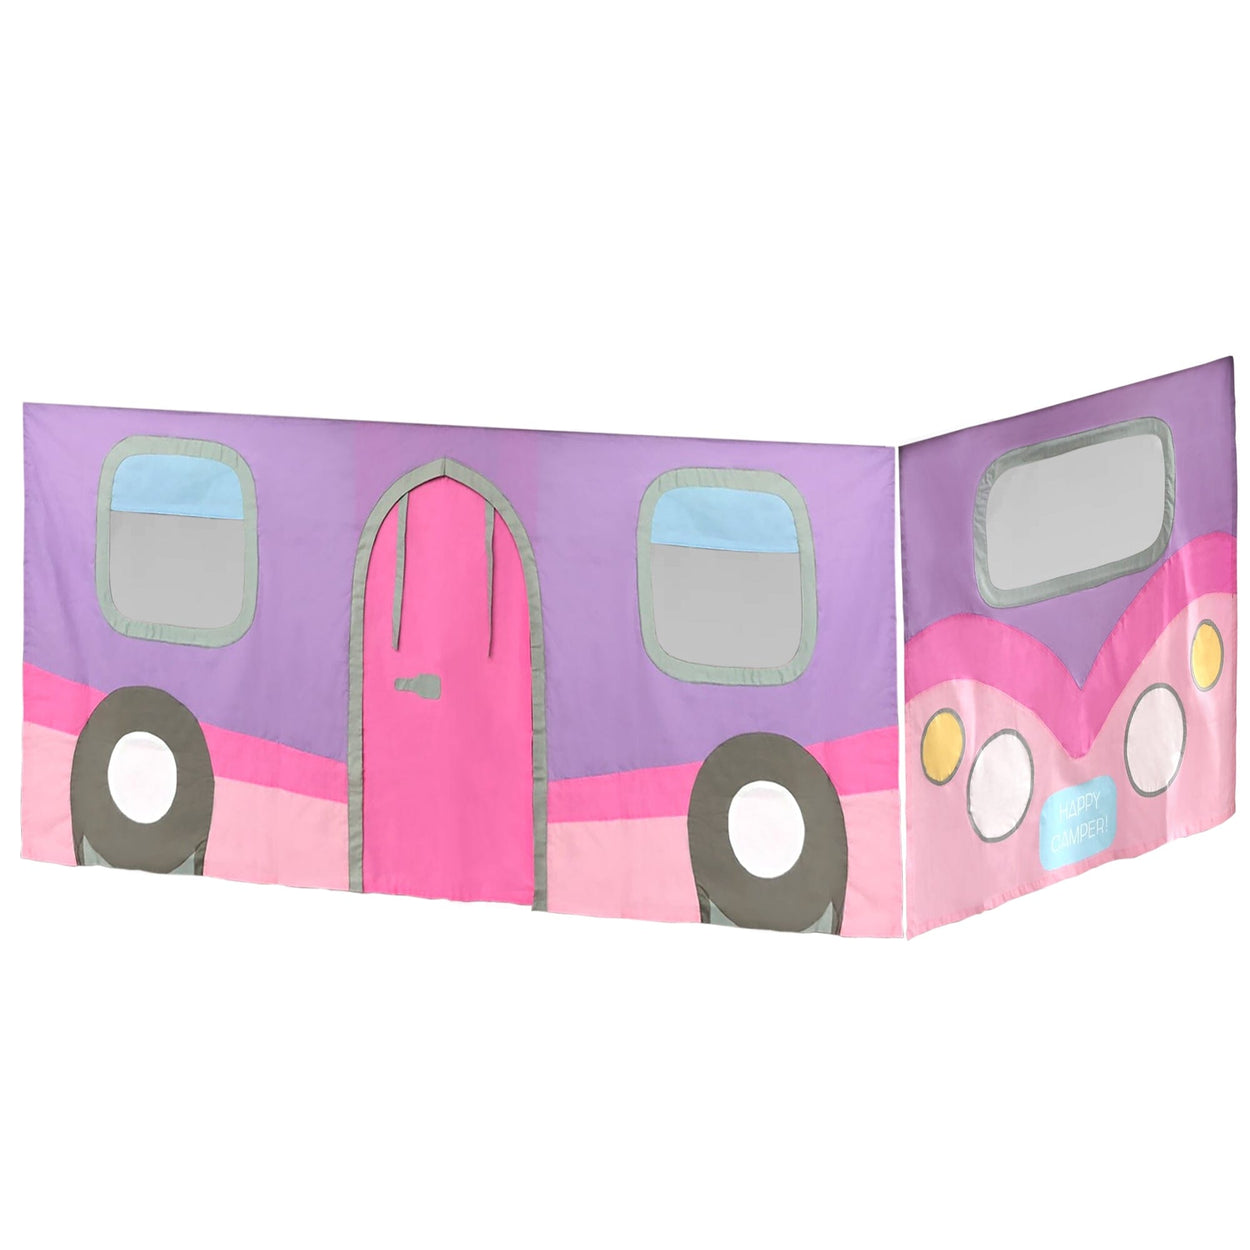 180032-056 : Curtain Camper Van Curtain, Pink/Purple